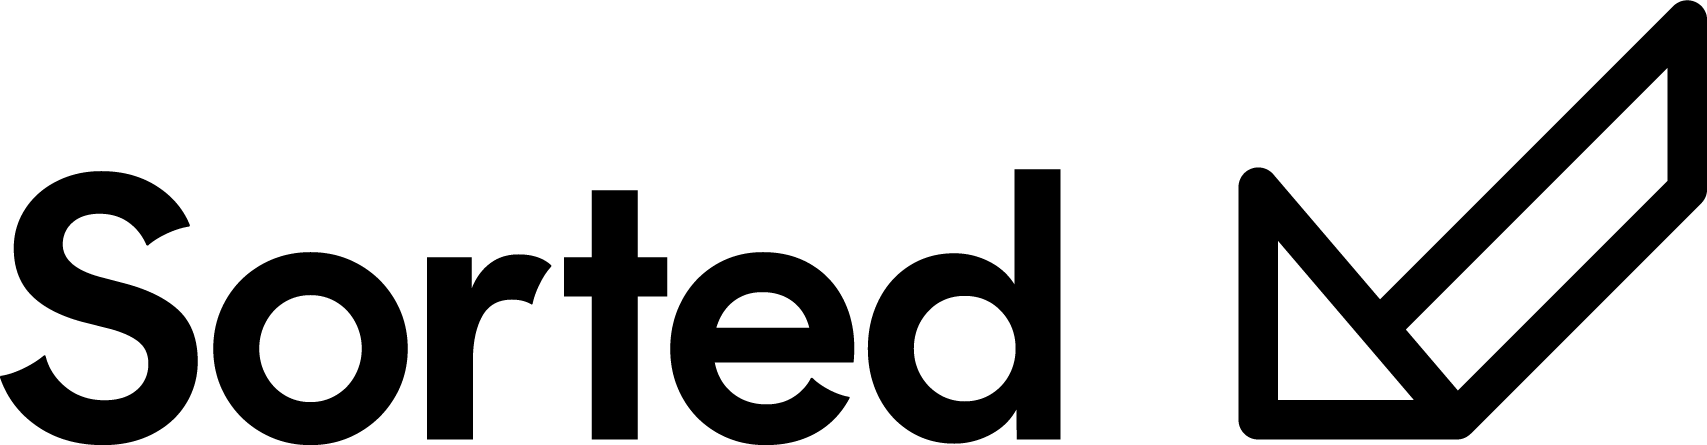 sorted-logo-horizontal-black